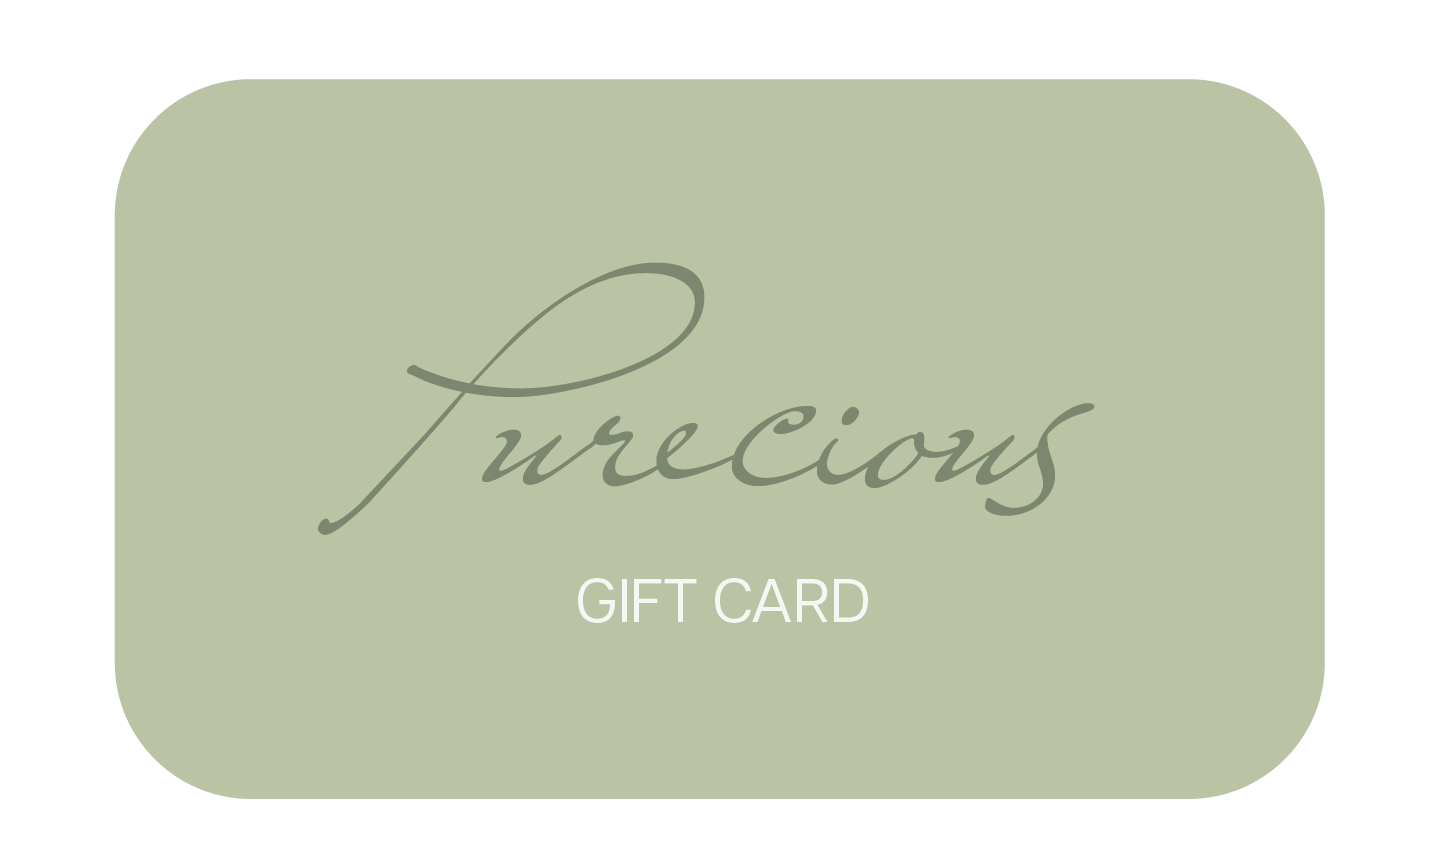 Purecious Jewelry Gift Card